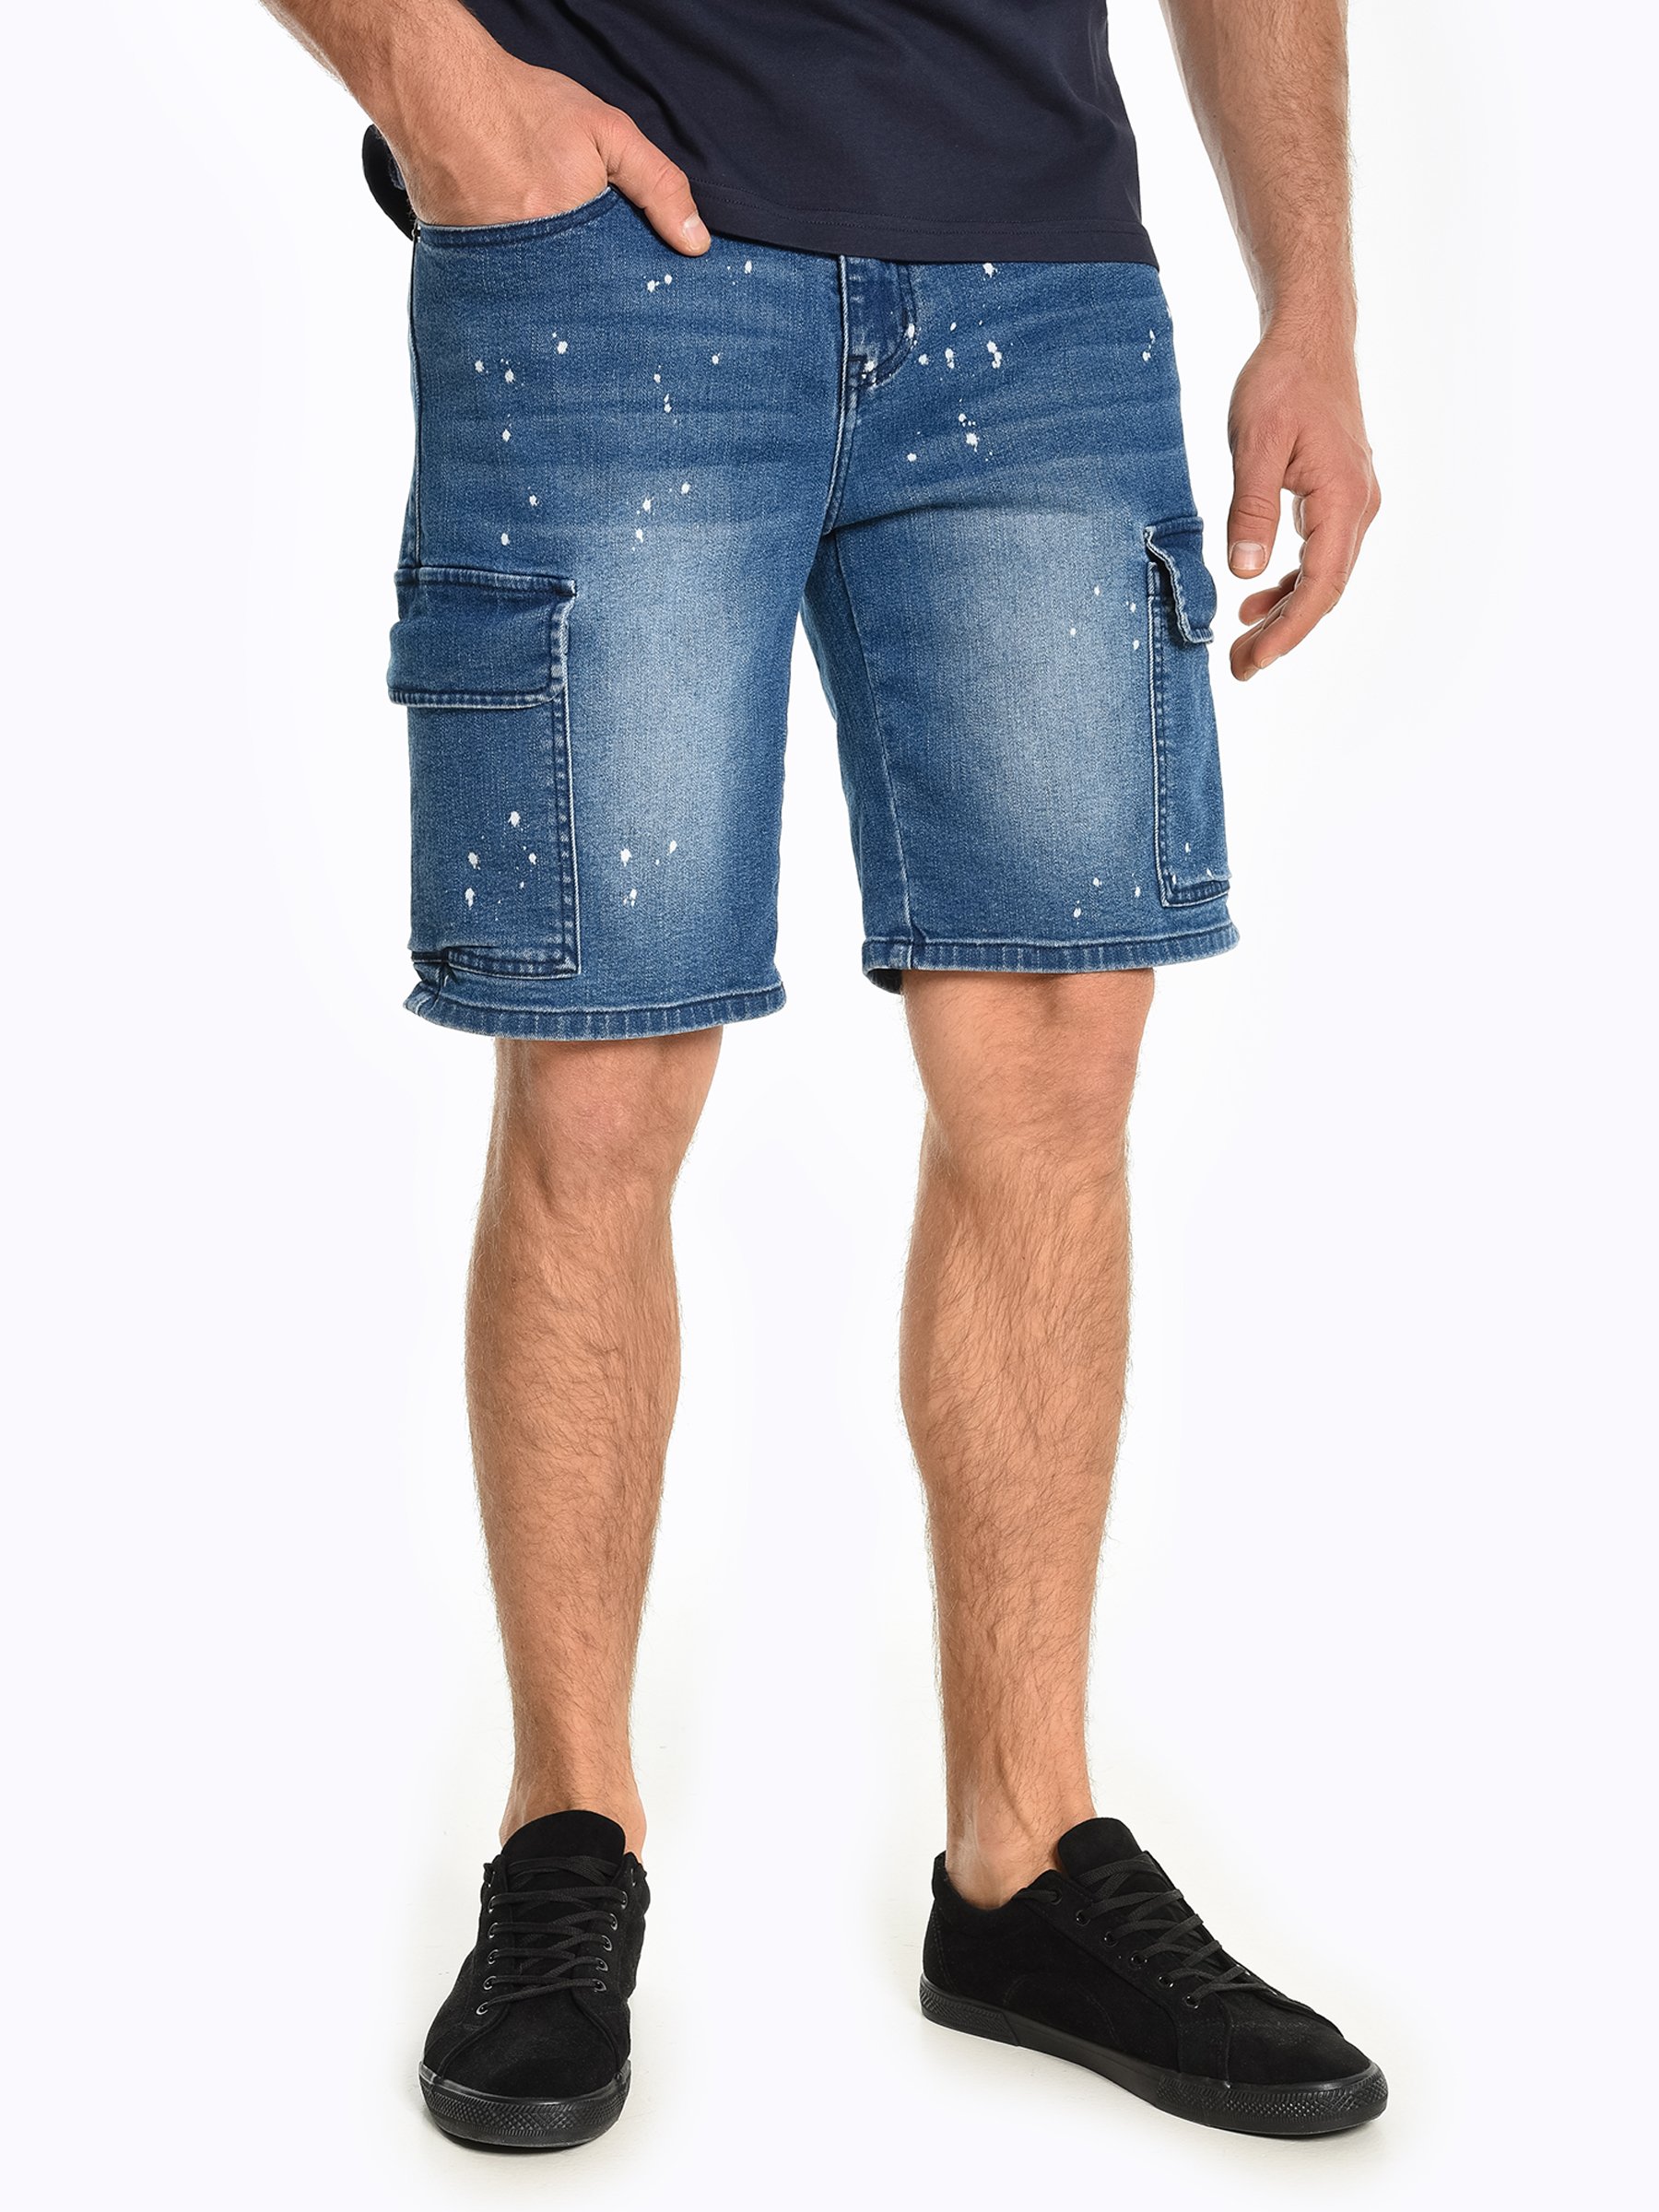 discount 57% MEN FASHION Jeans Worn-in Blue M Jack & Jones shorts jeans 